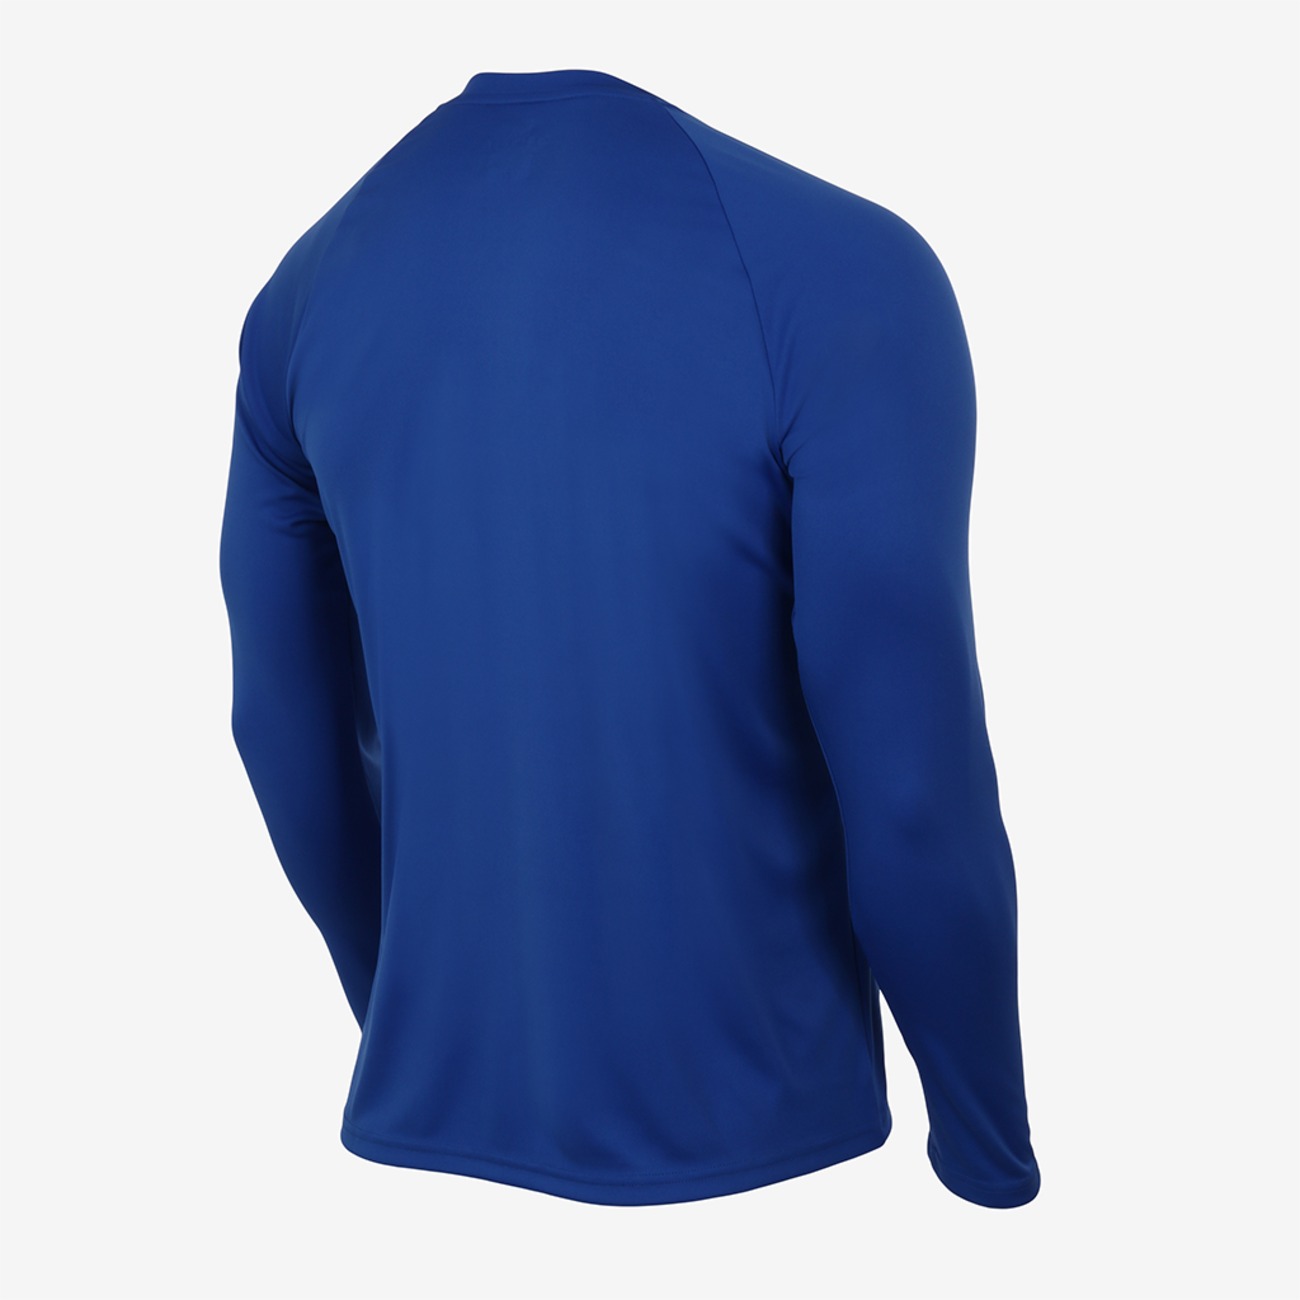 Camiseta Nike Hydroguard Essential UV Masculina - Foto 2